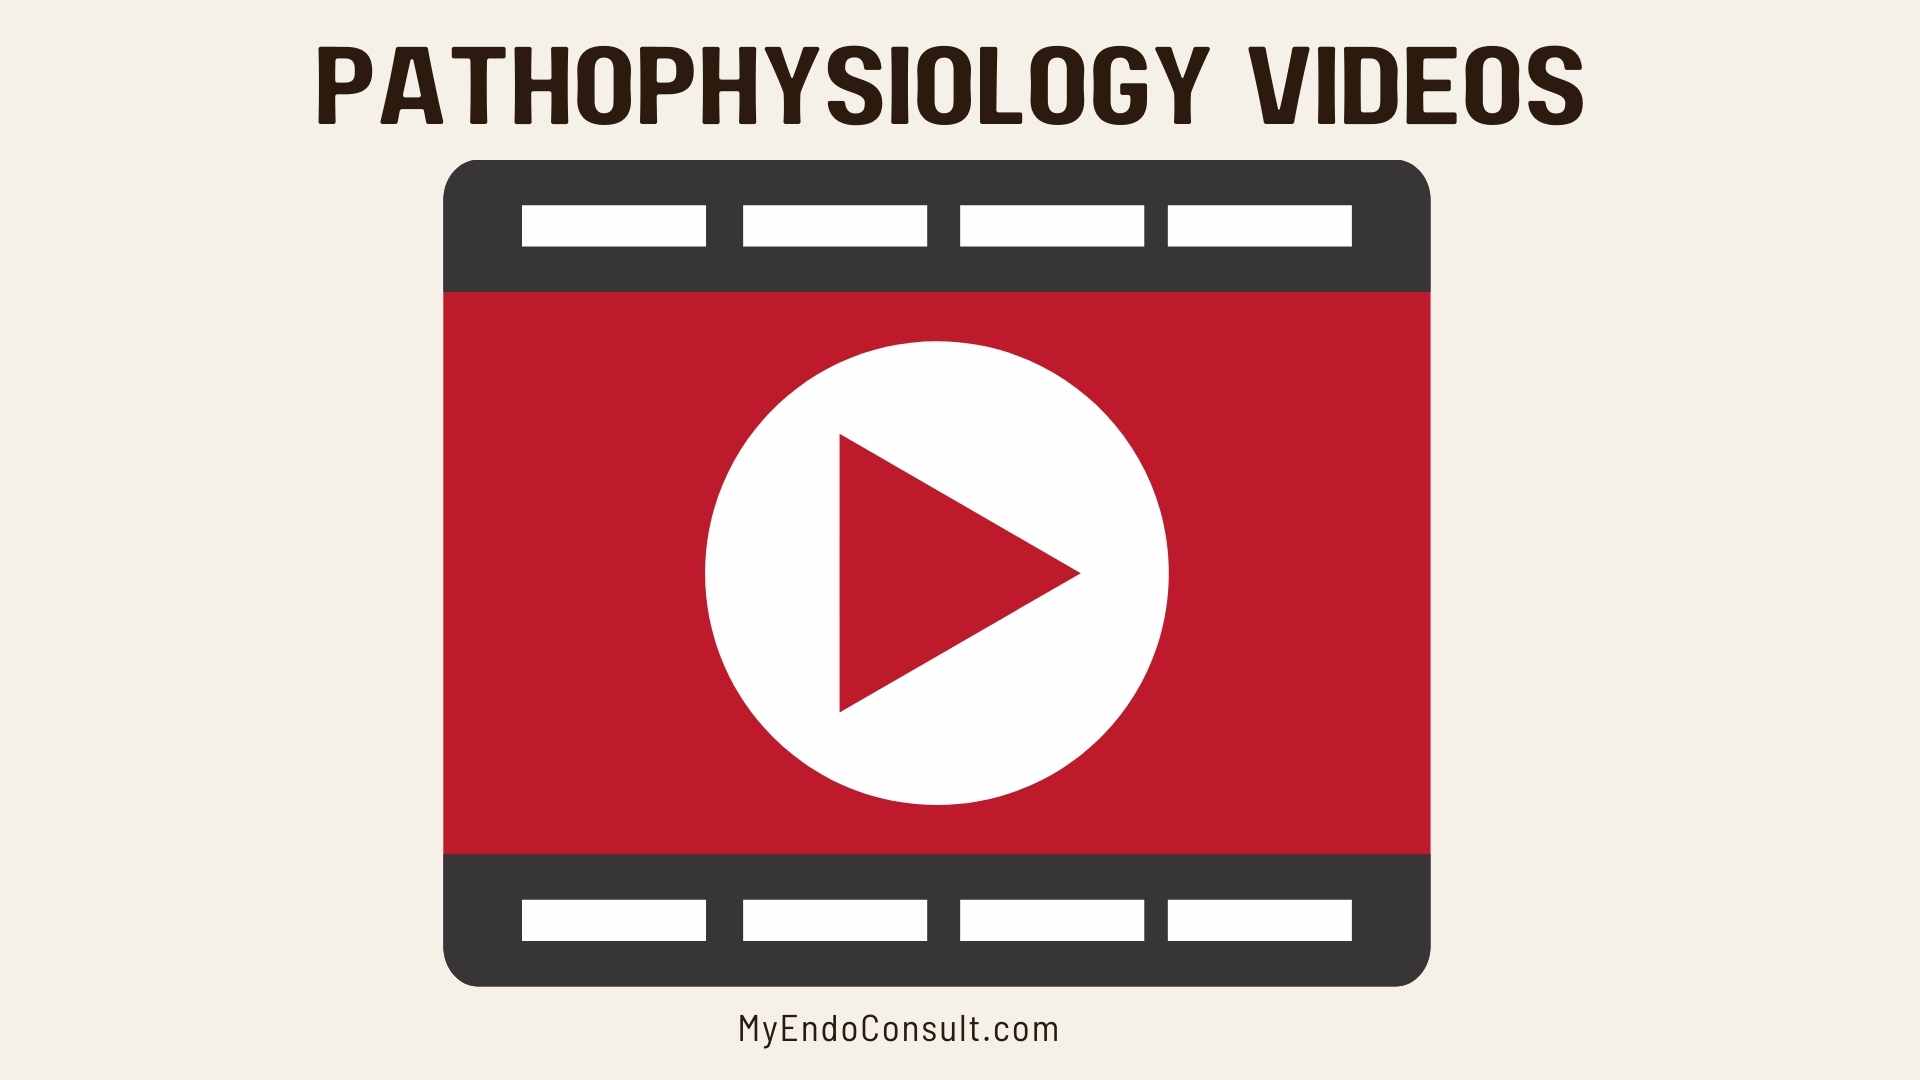 Pathophysiology Videos